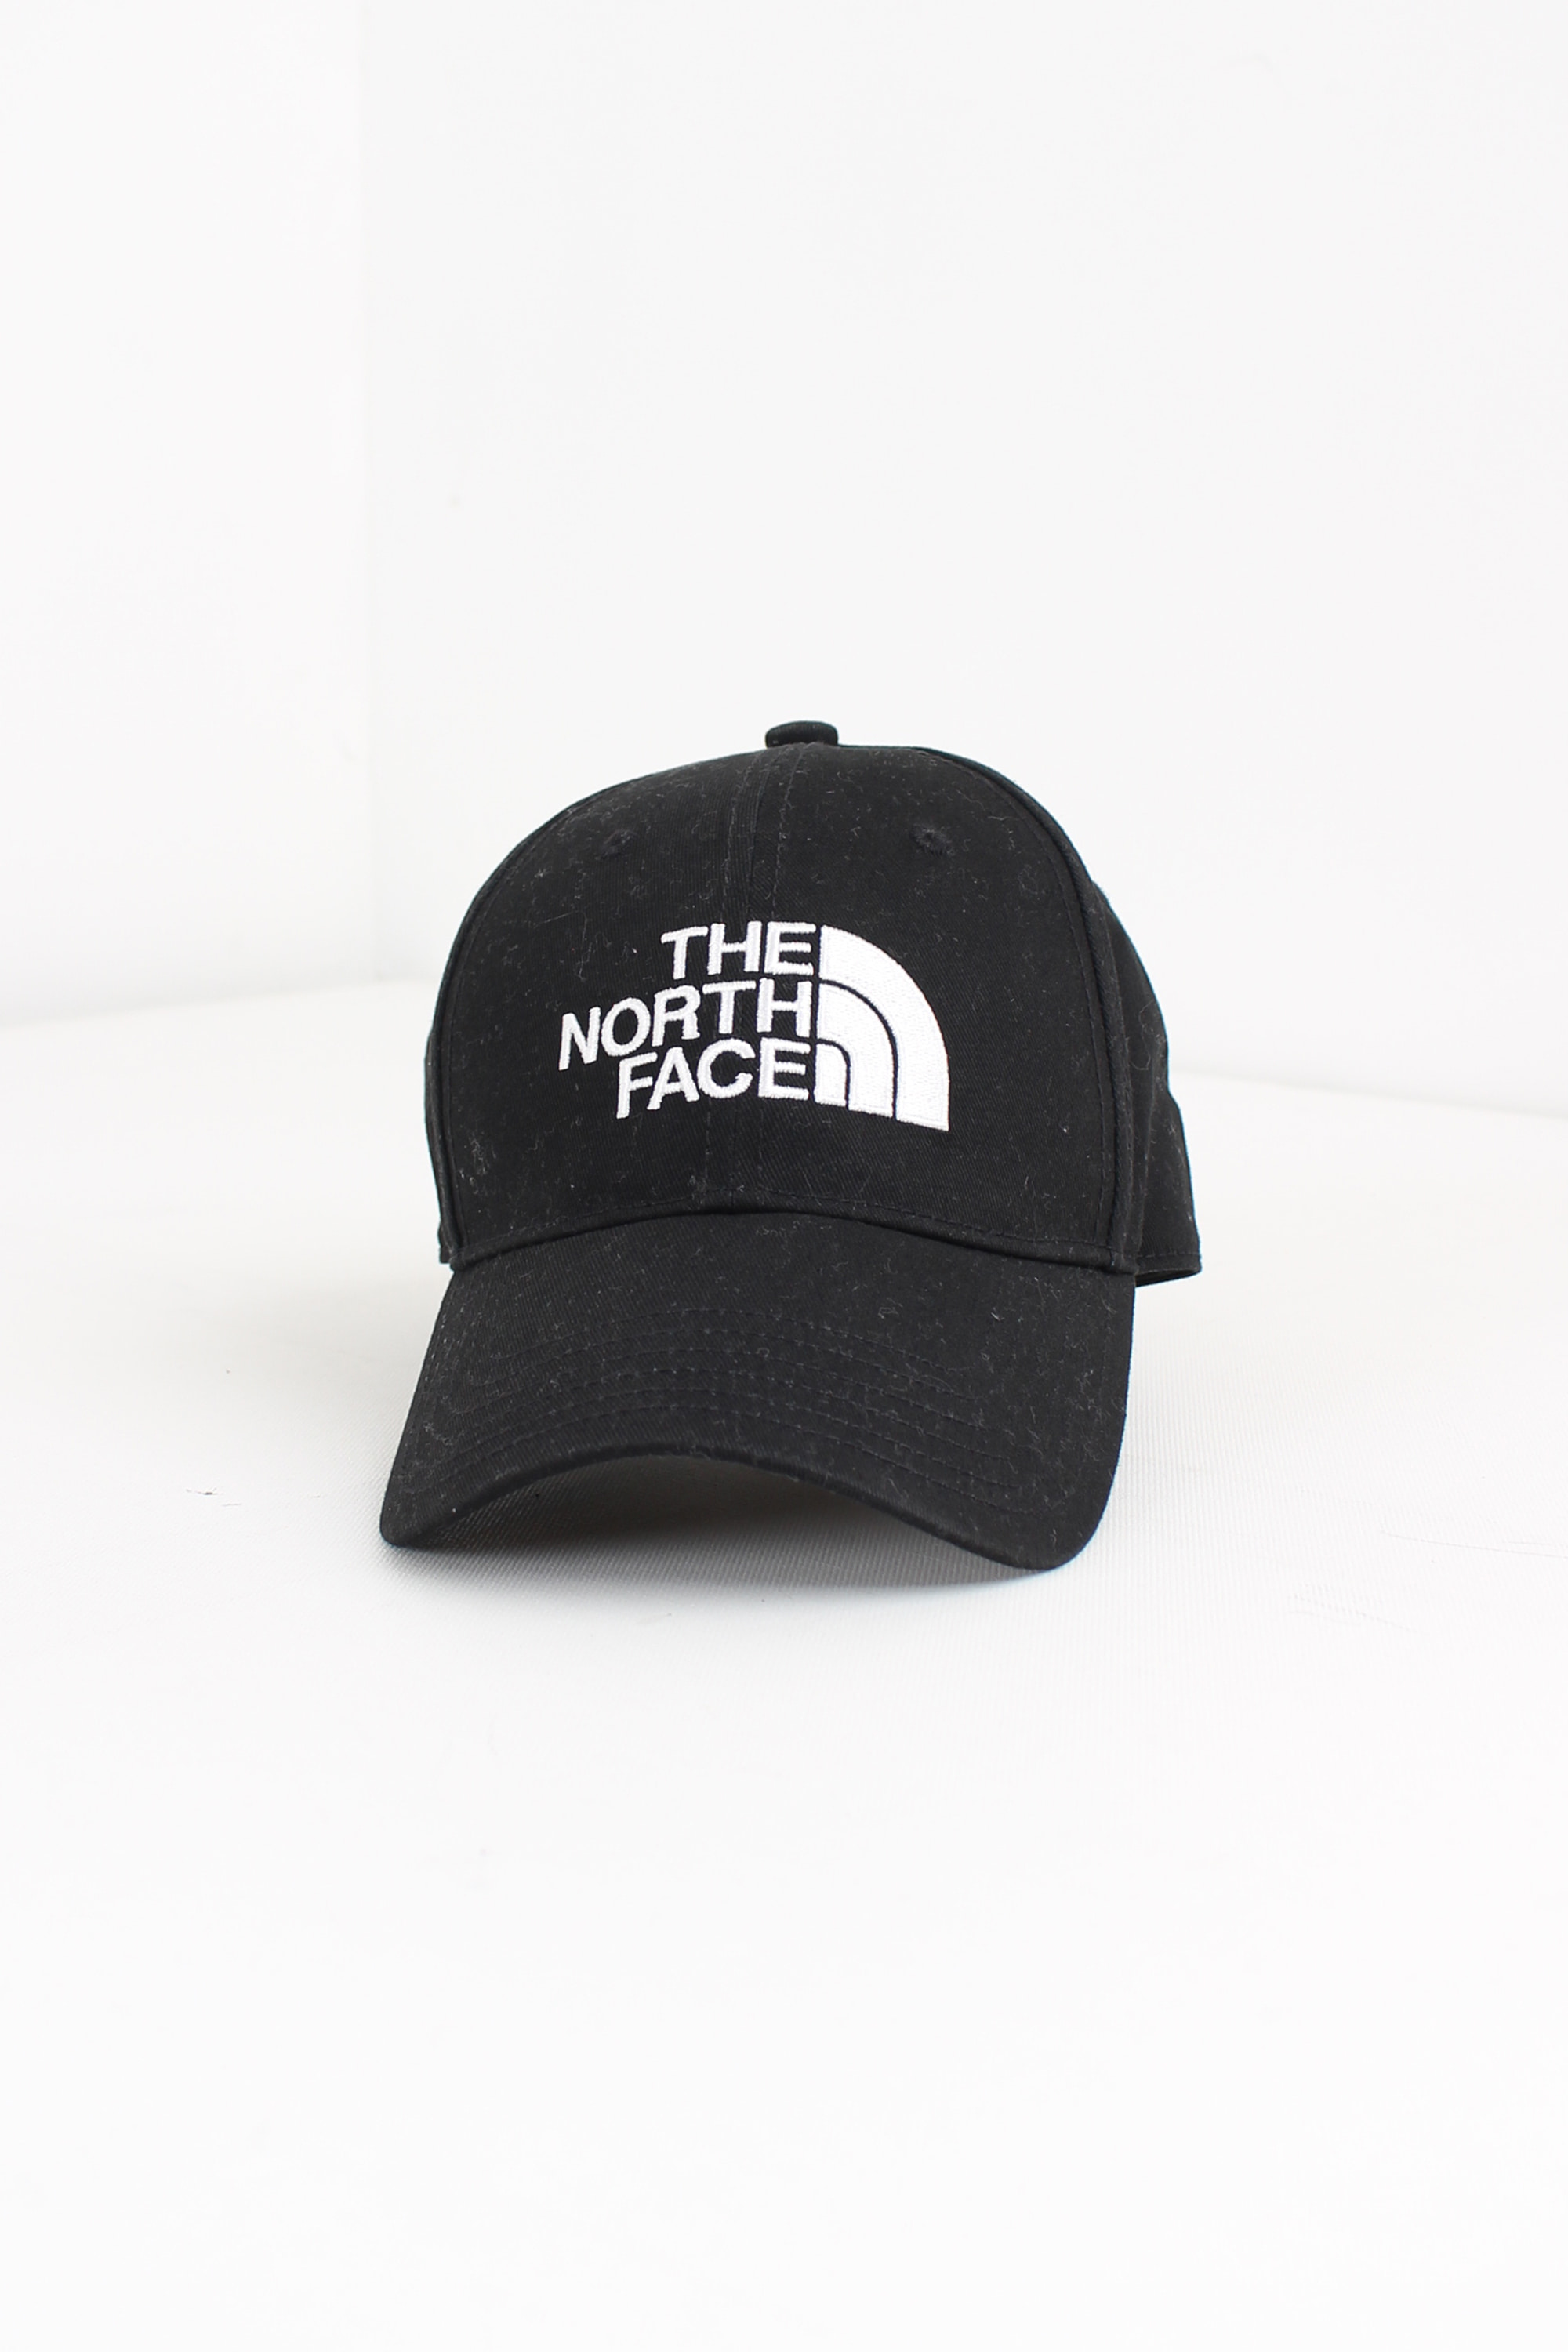 the north face logo cap